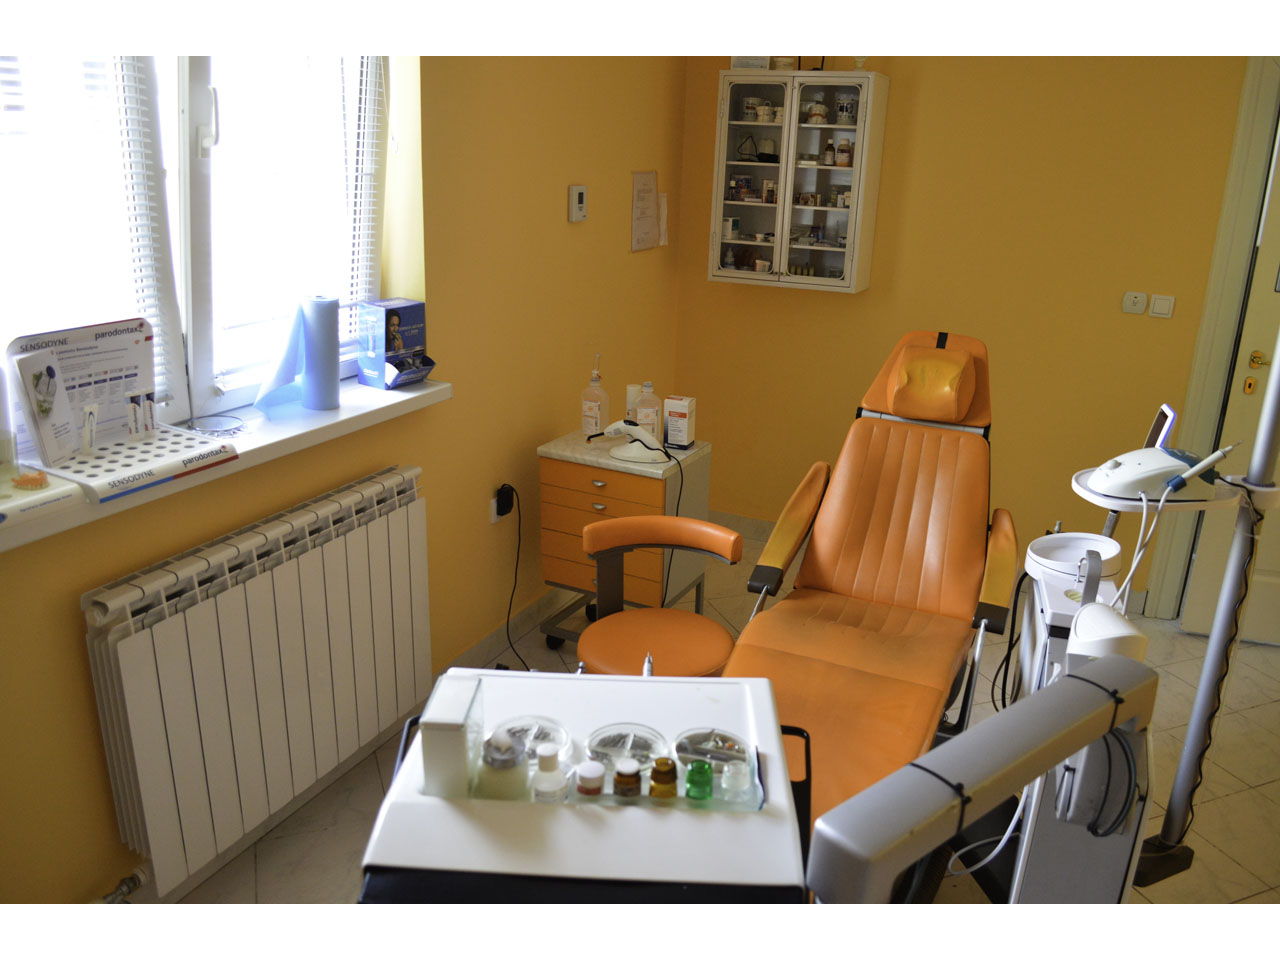 DENTAL OFFICE JOVANA SAVIC Dental orthotics Belgrade - Photo 1